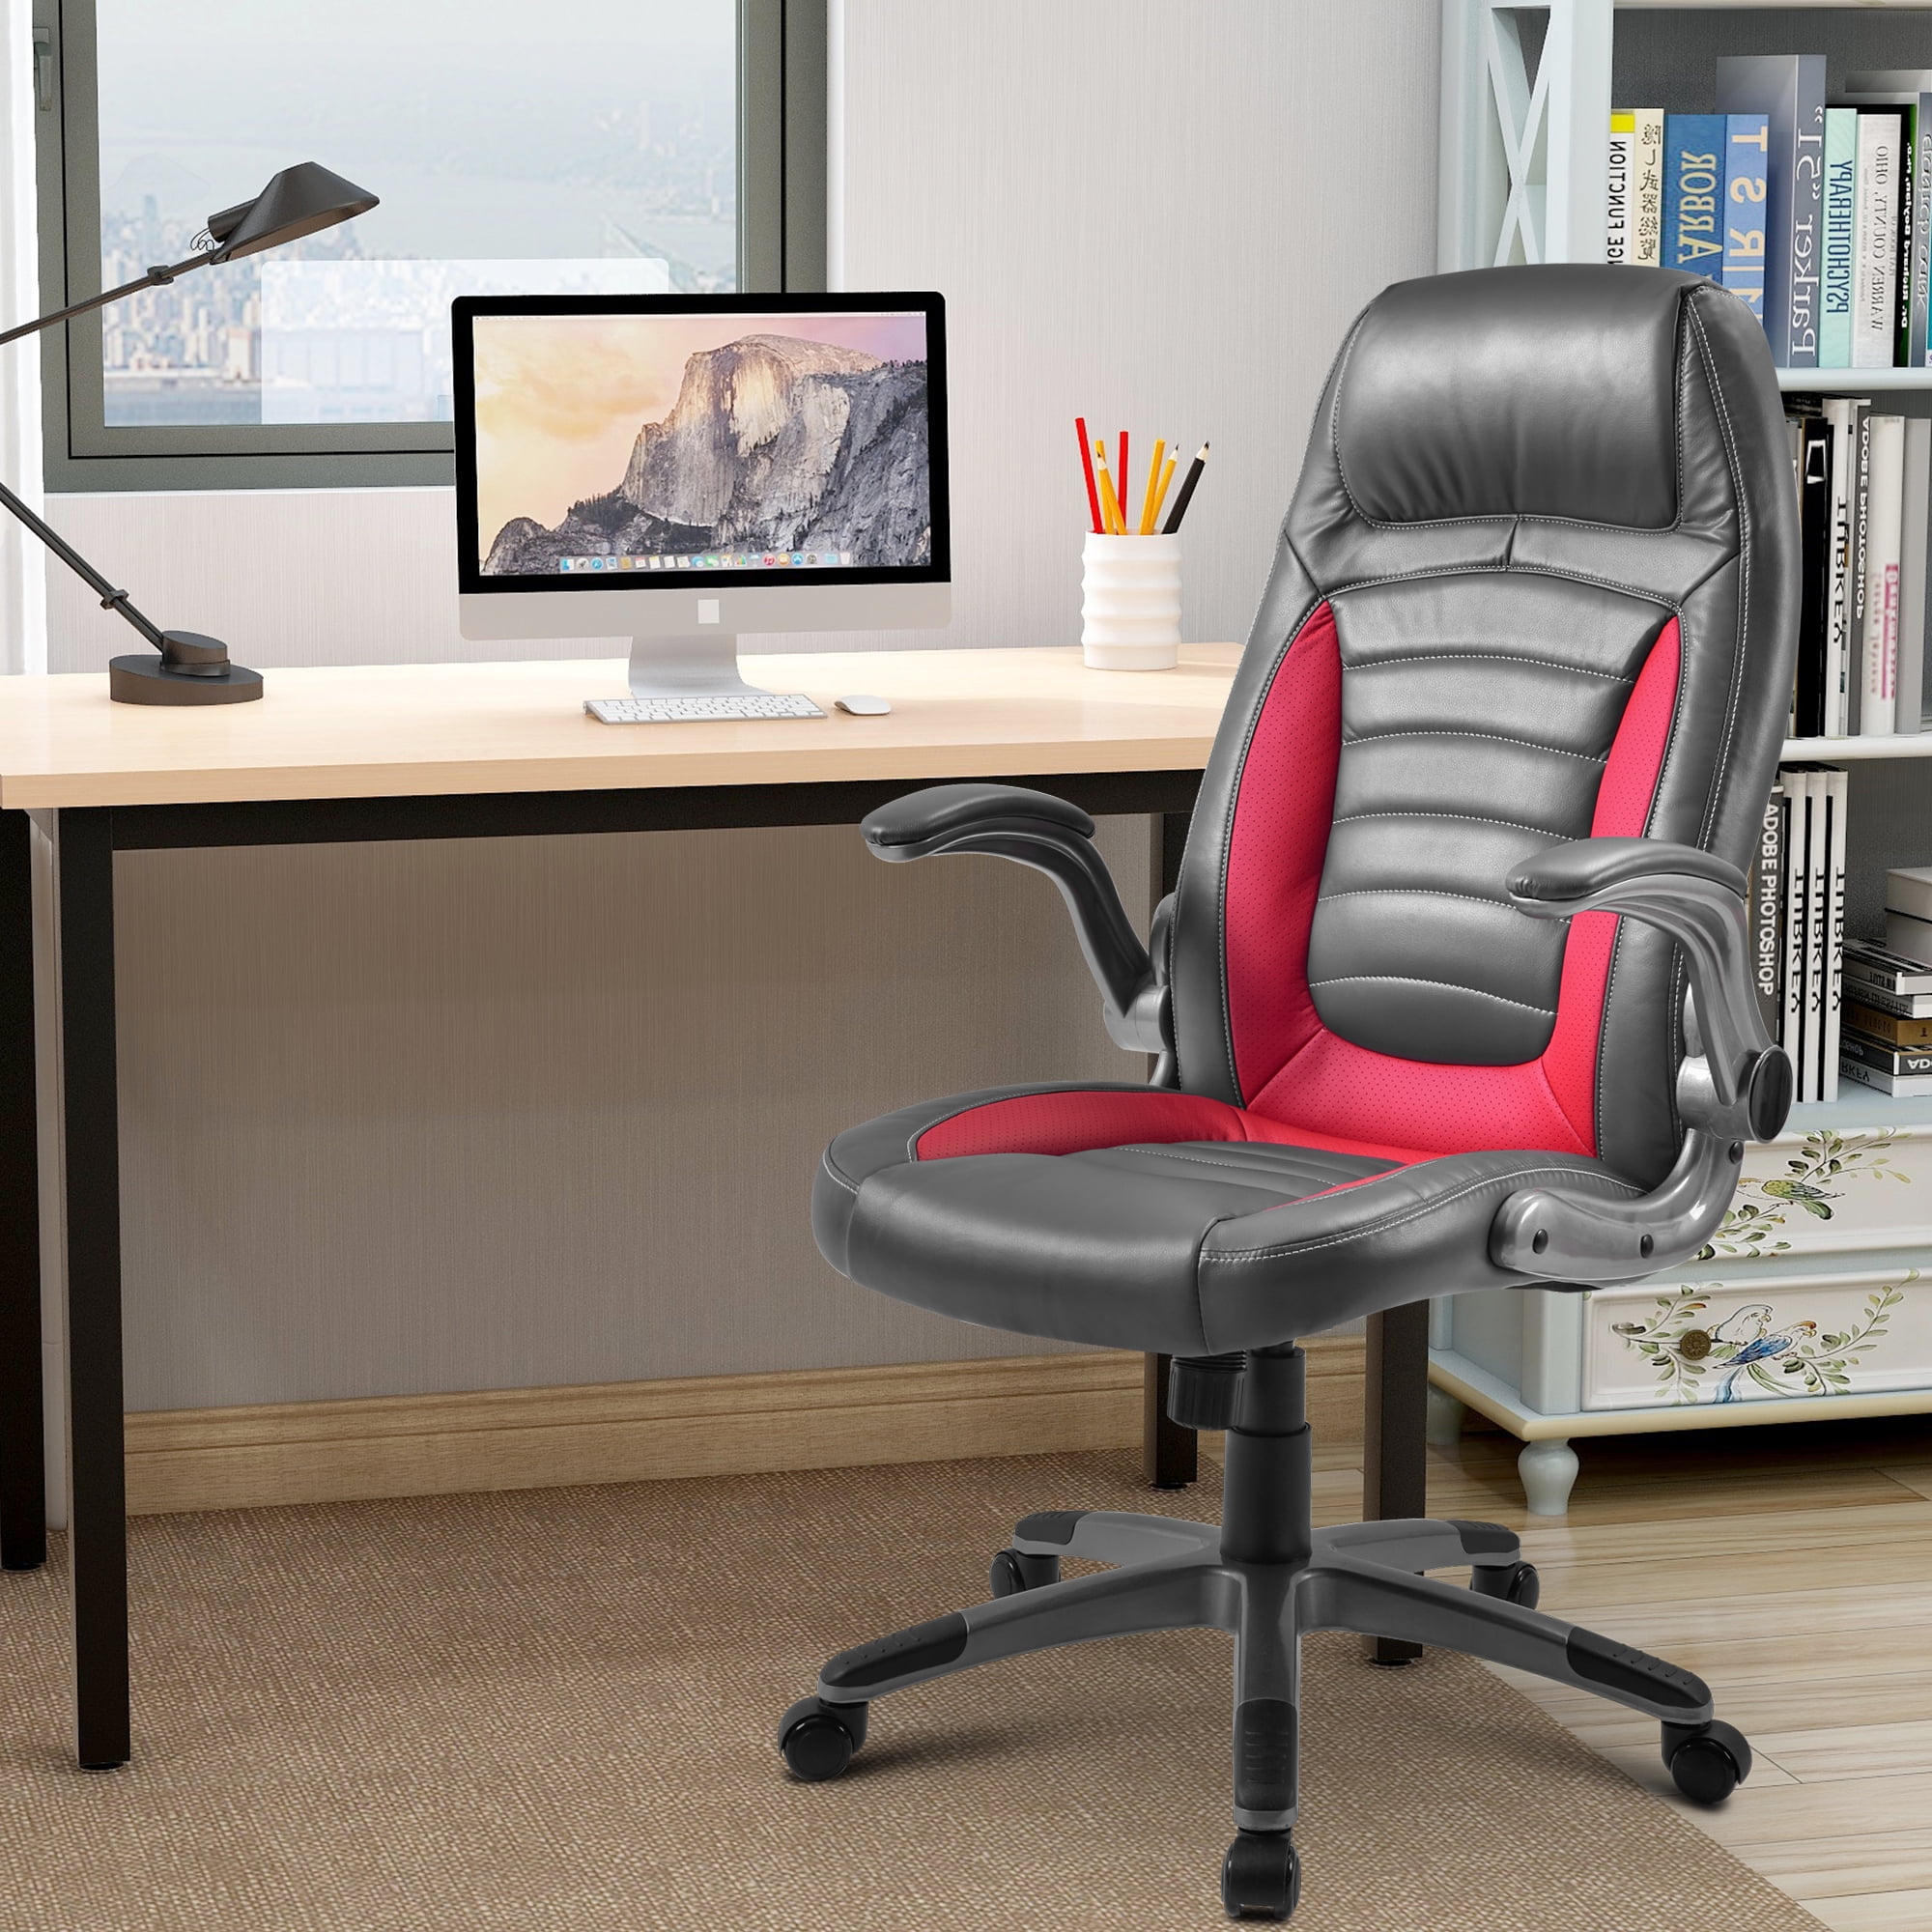 Merax Ergonomic High Back Racing Style Gaming Office Chair